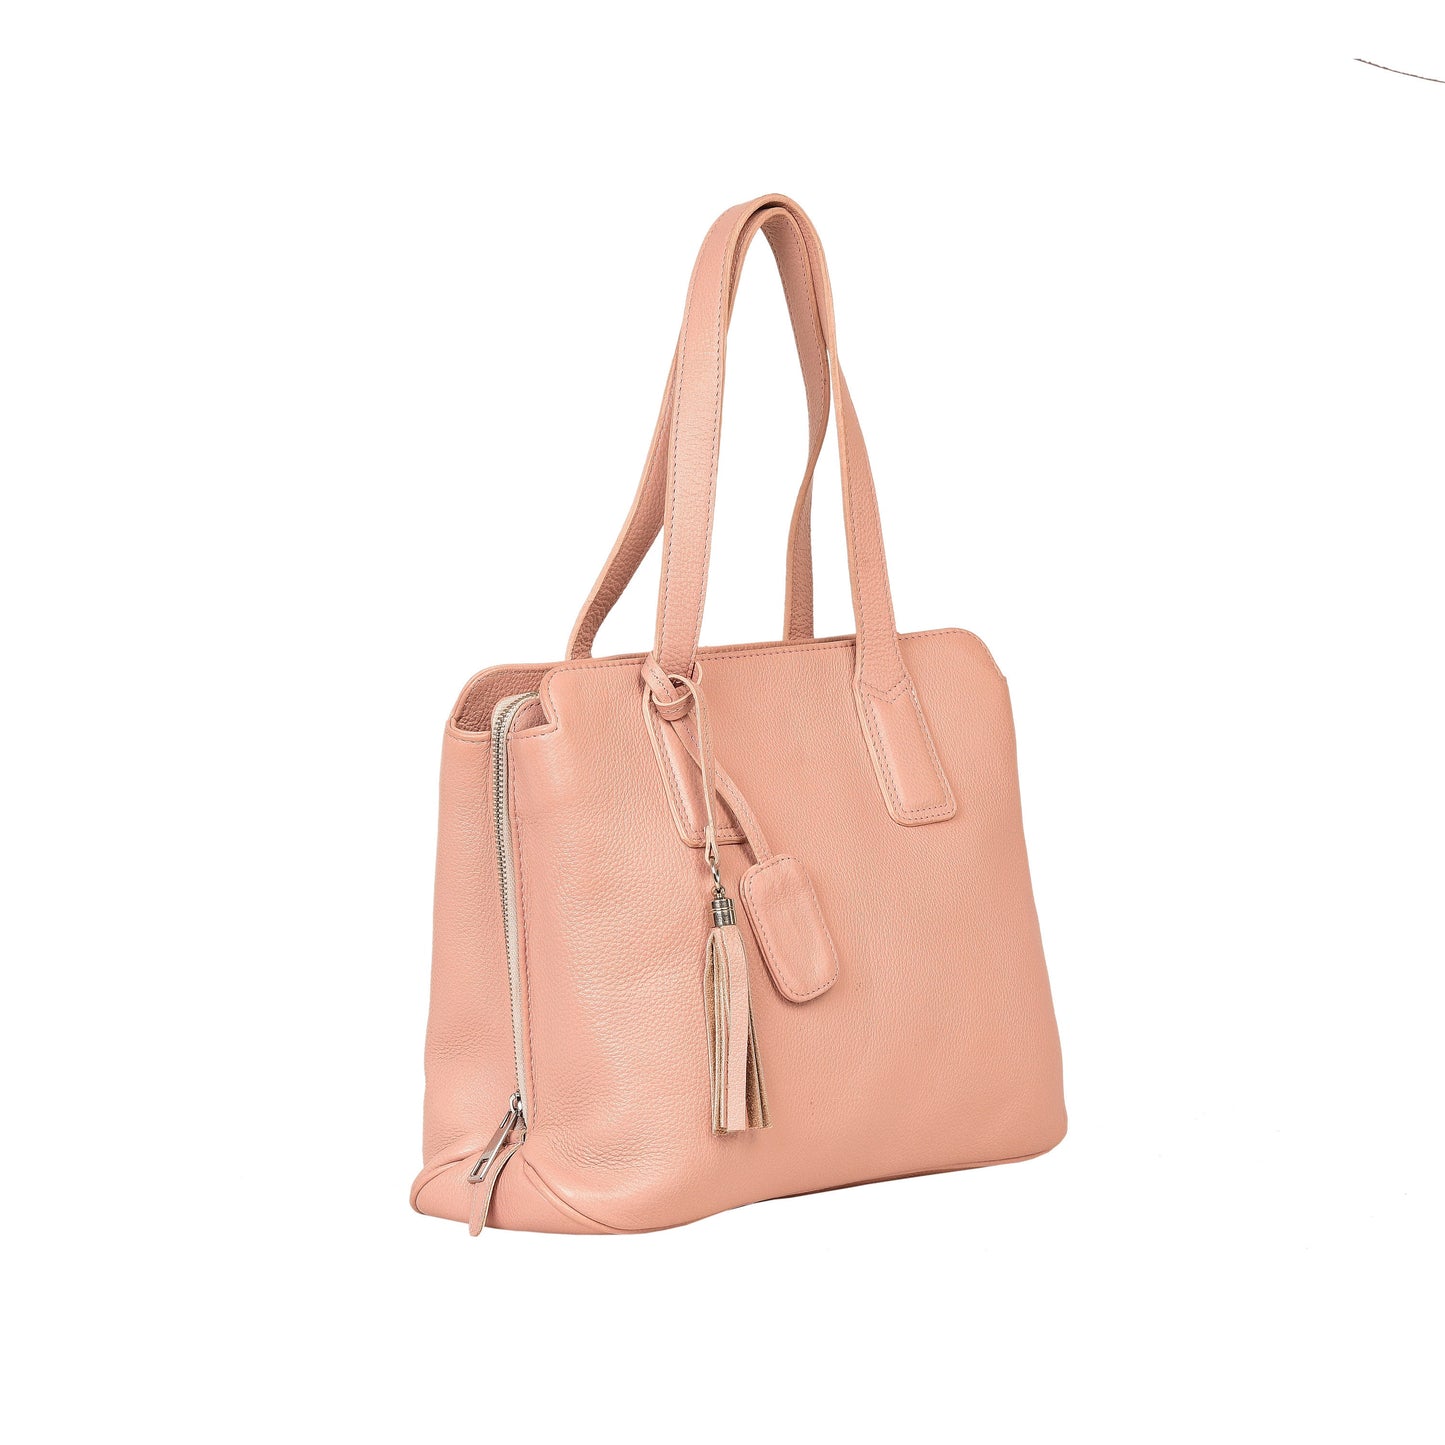 Baby Pink Leather Handbag for Women's Party Handbag Long Handle Bag for Women Gift for Her Everyday Handbag Satchel Bag